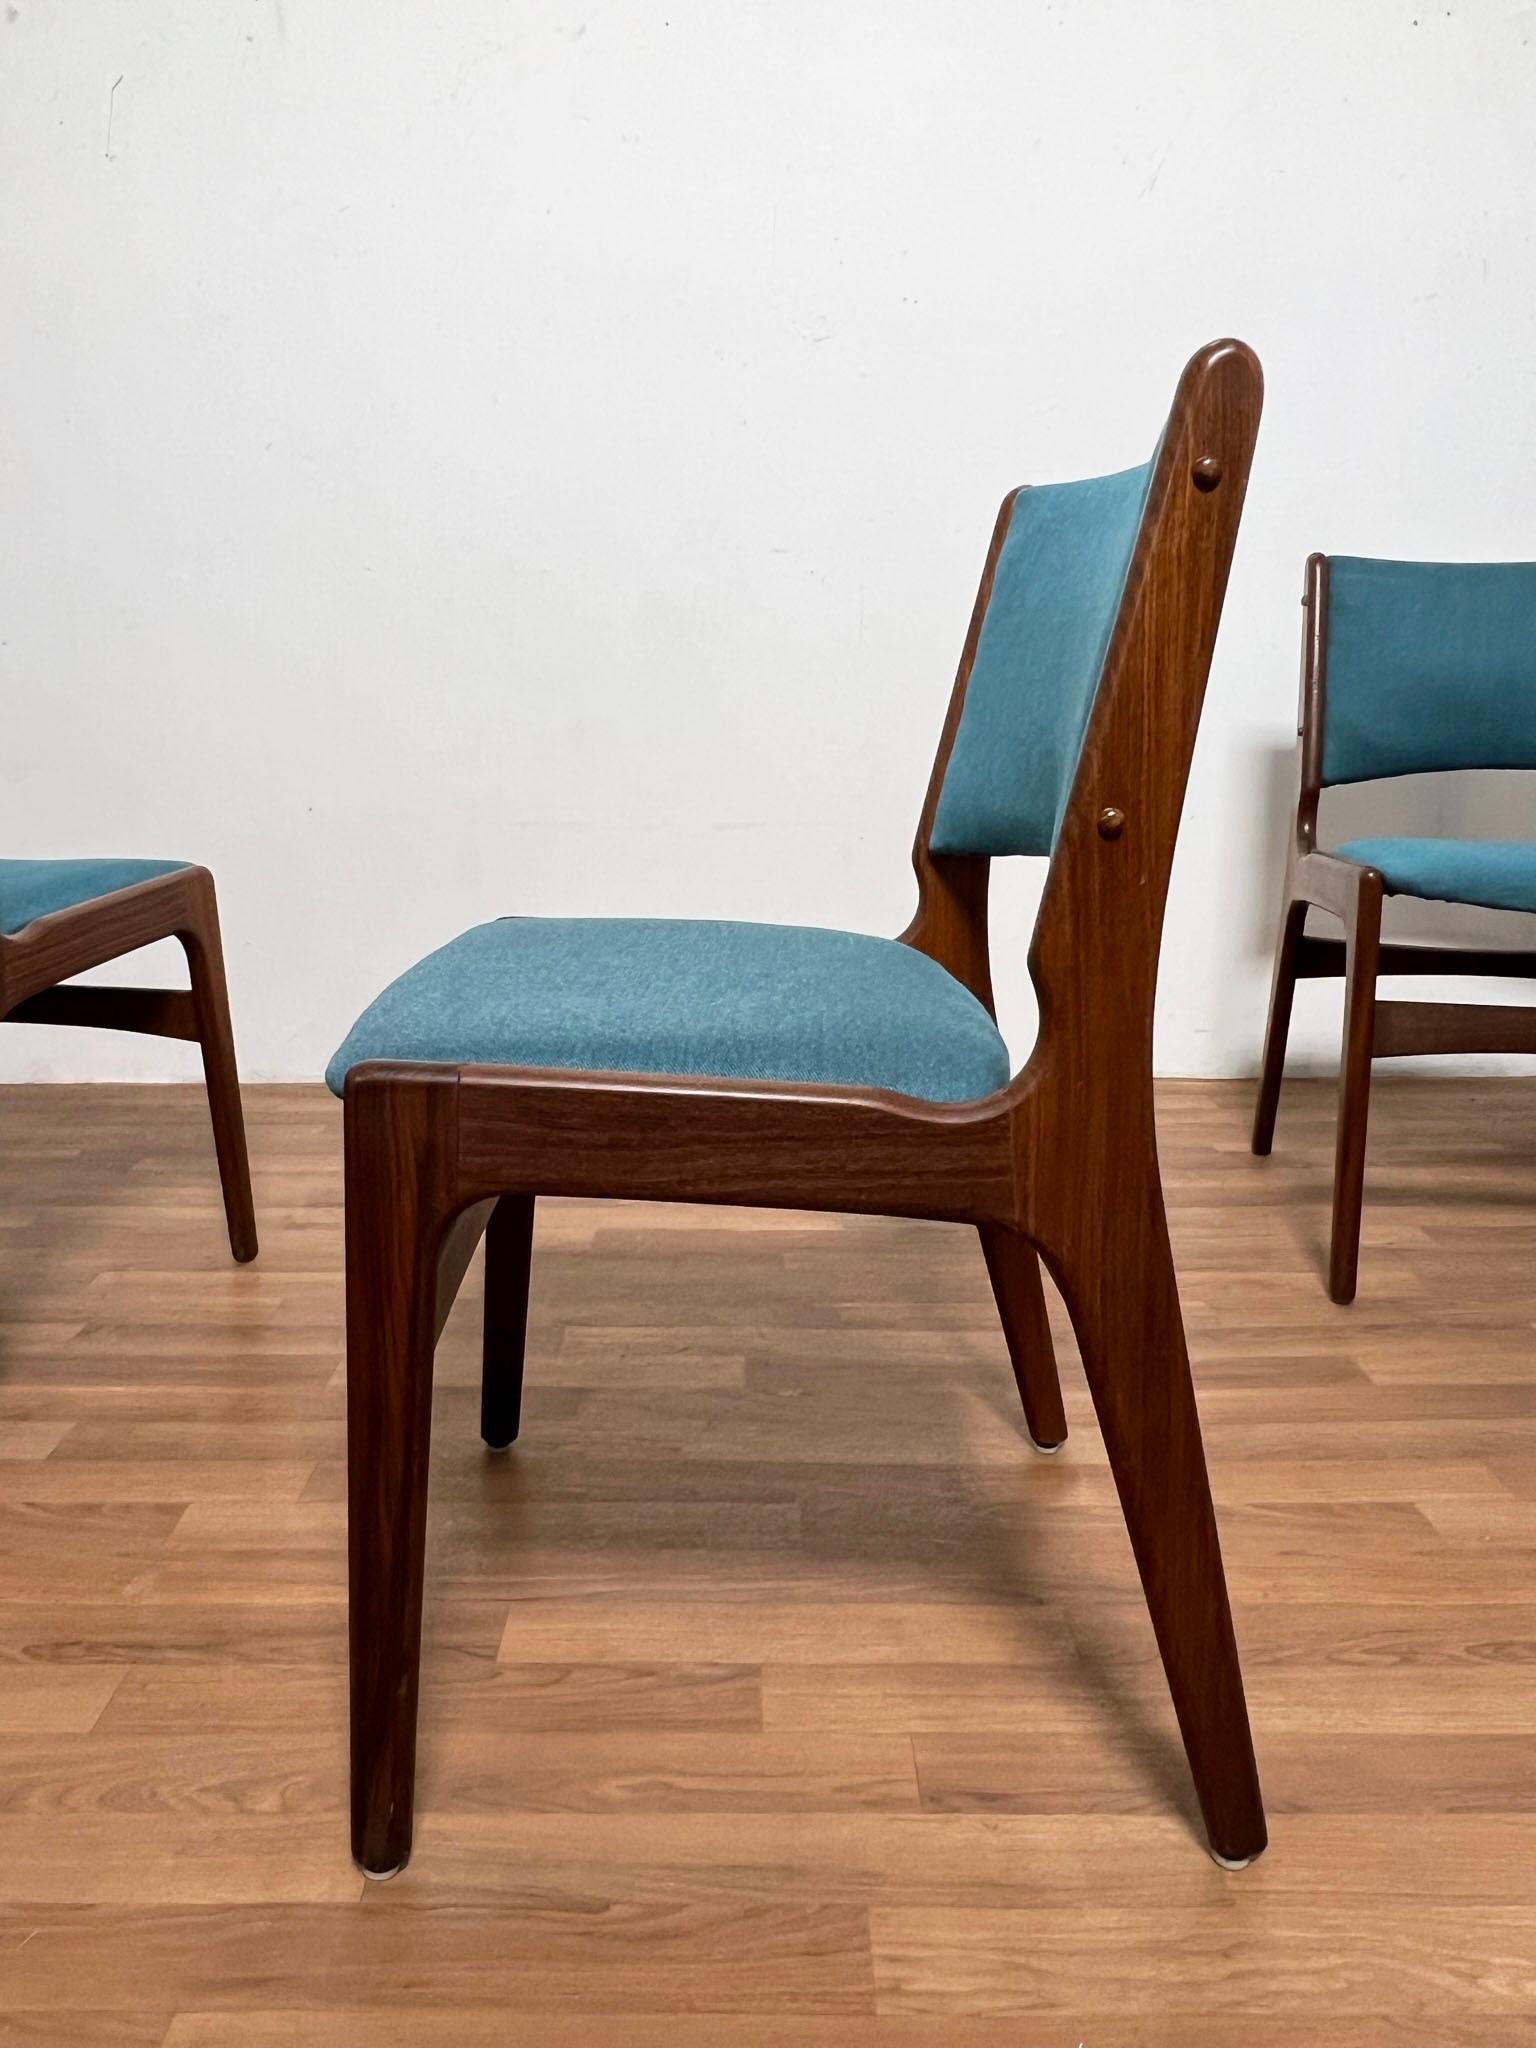 A set of eight Danish teak dining chairs, model #89 by designer Erik Buch for Anderstrup Mobelfabrik, ca. 1960s.